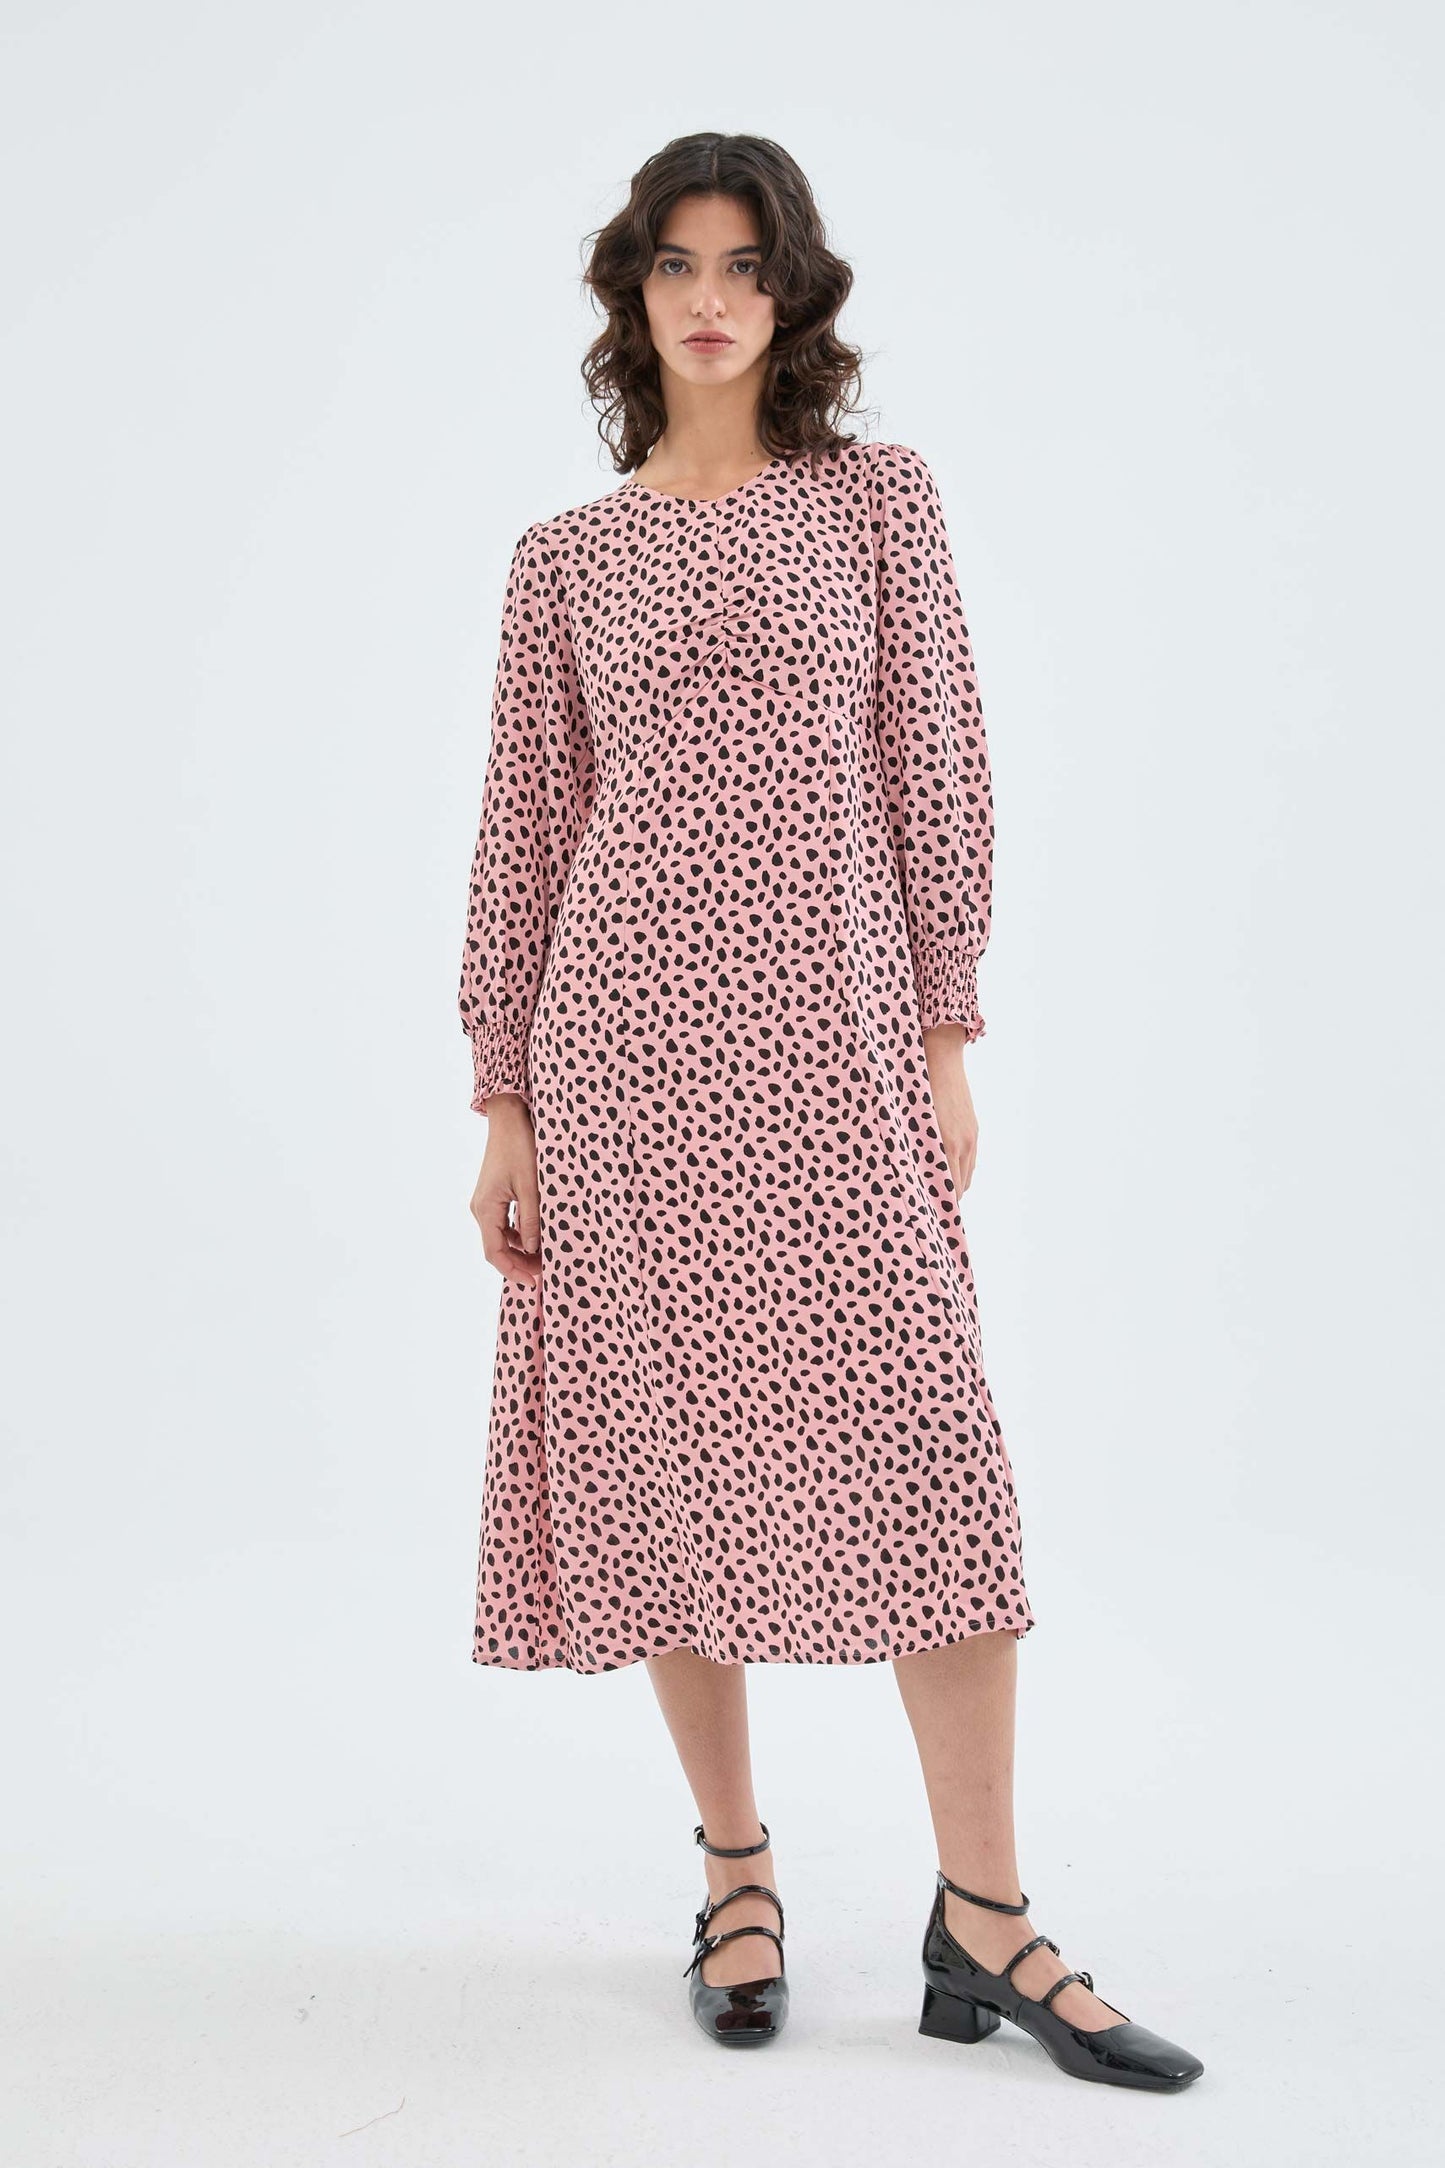 Midi dress with long sleeves and pink polka dot print